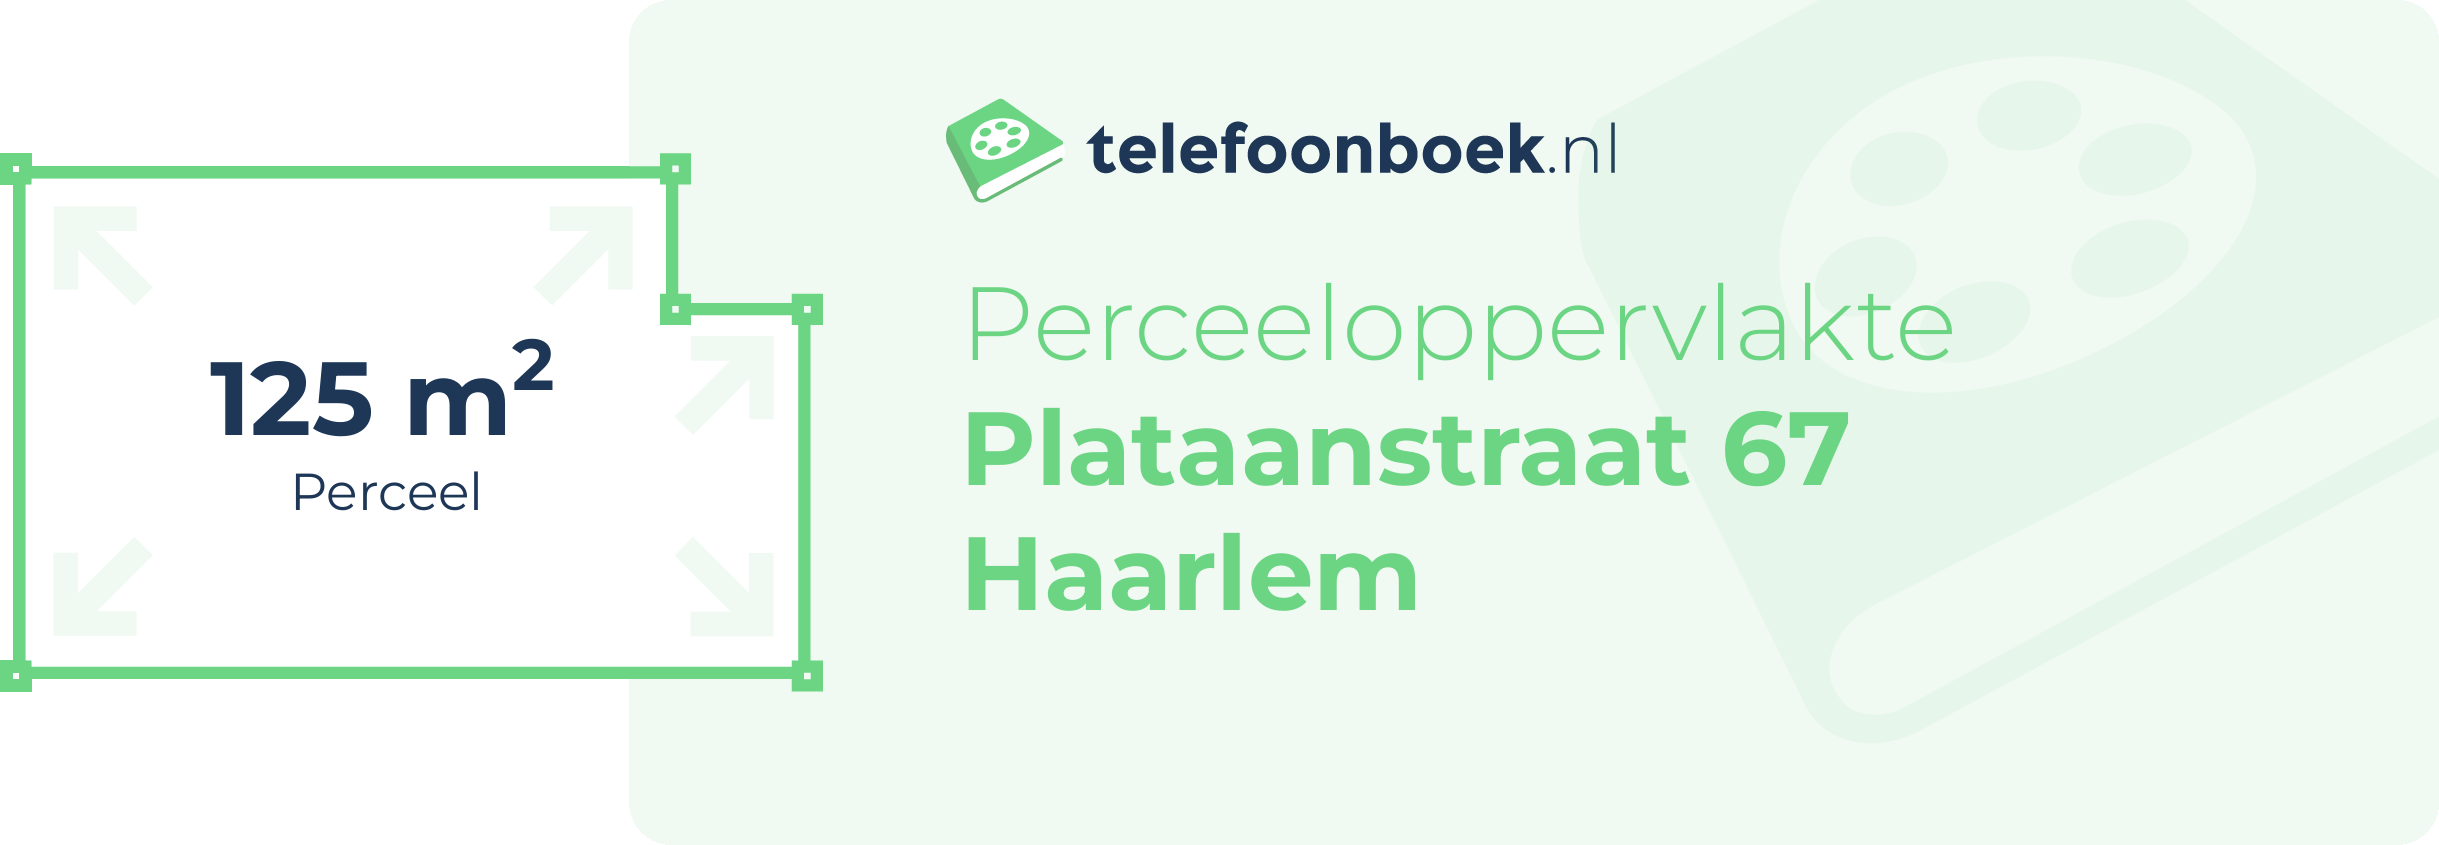 Perceeloppervlakte Plataanstraat 67 Haarlem